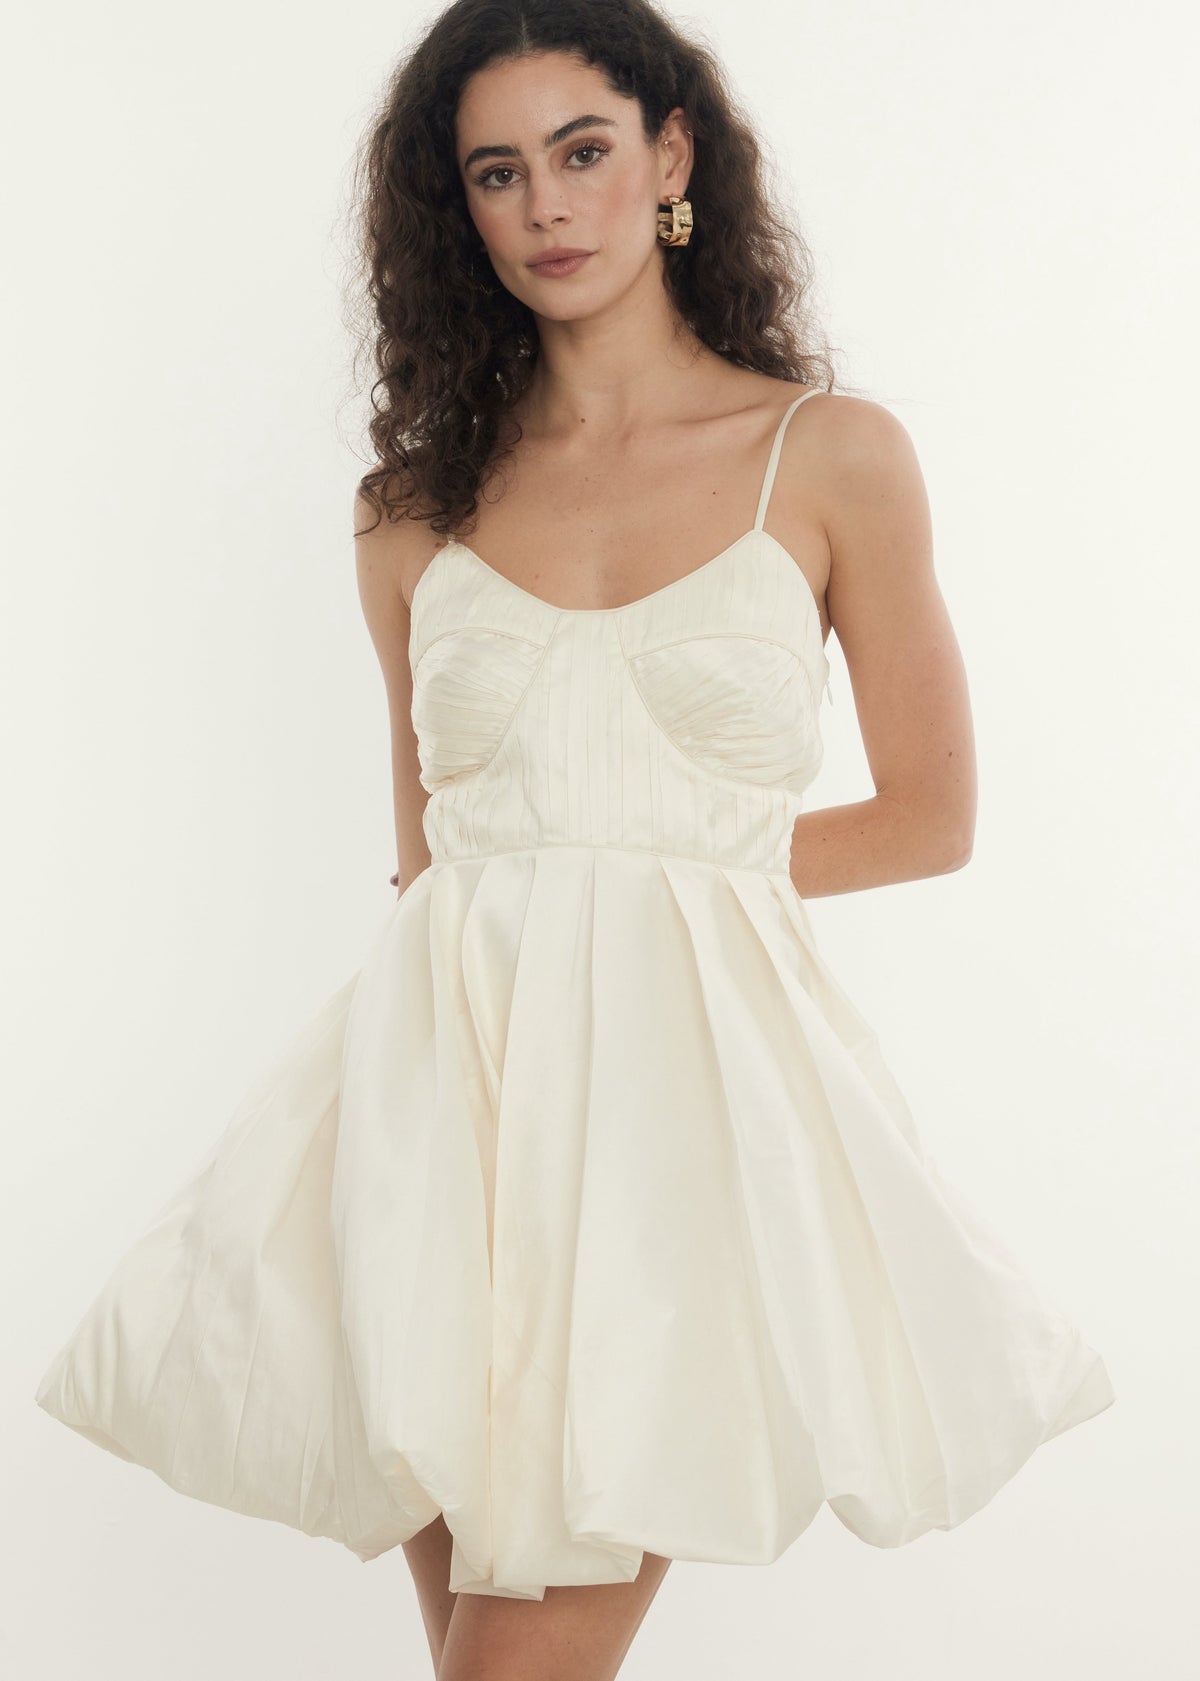 Cream Taffeta Mini Dress with ruching details